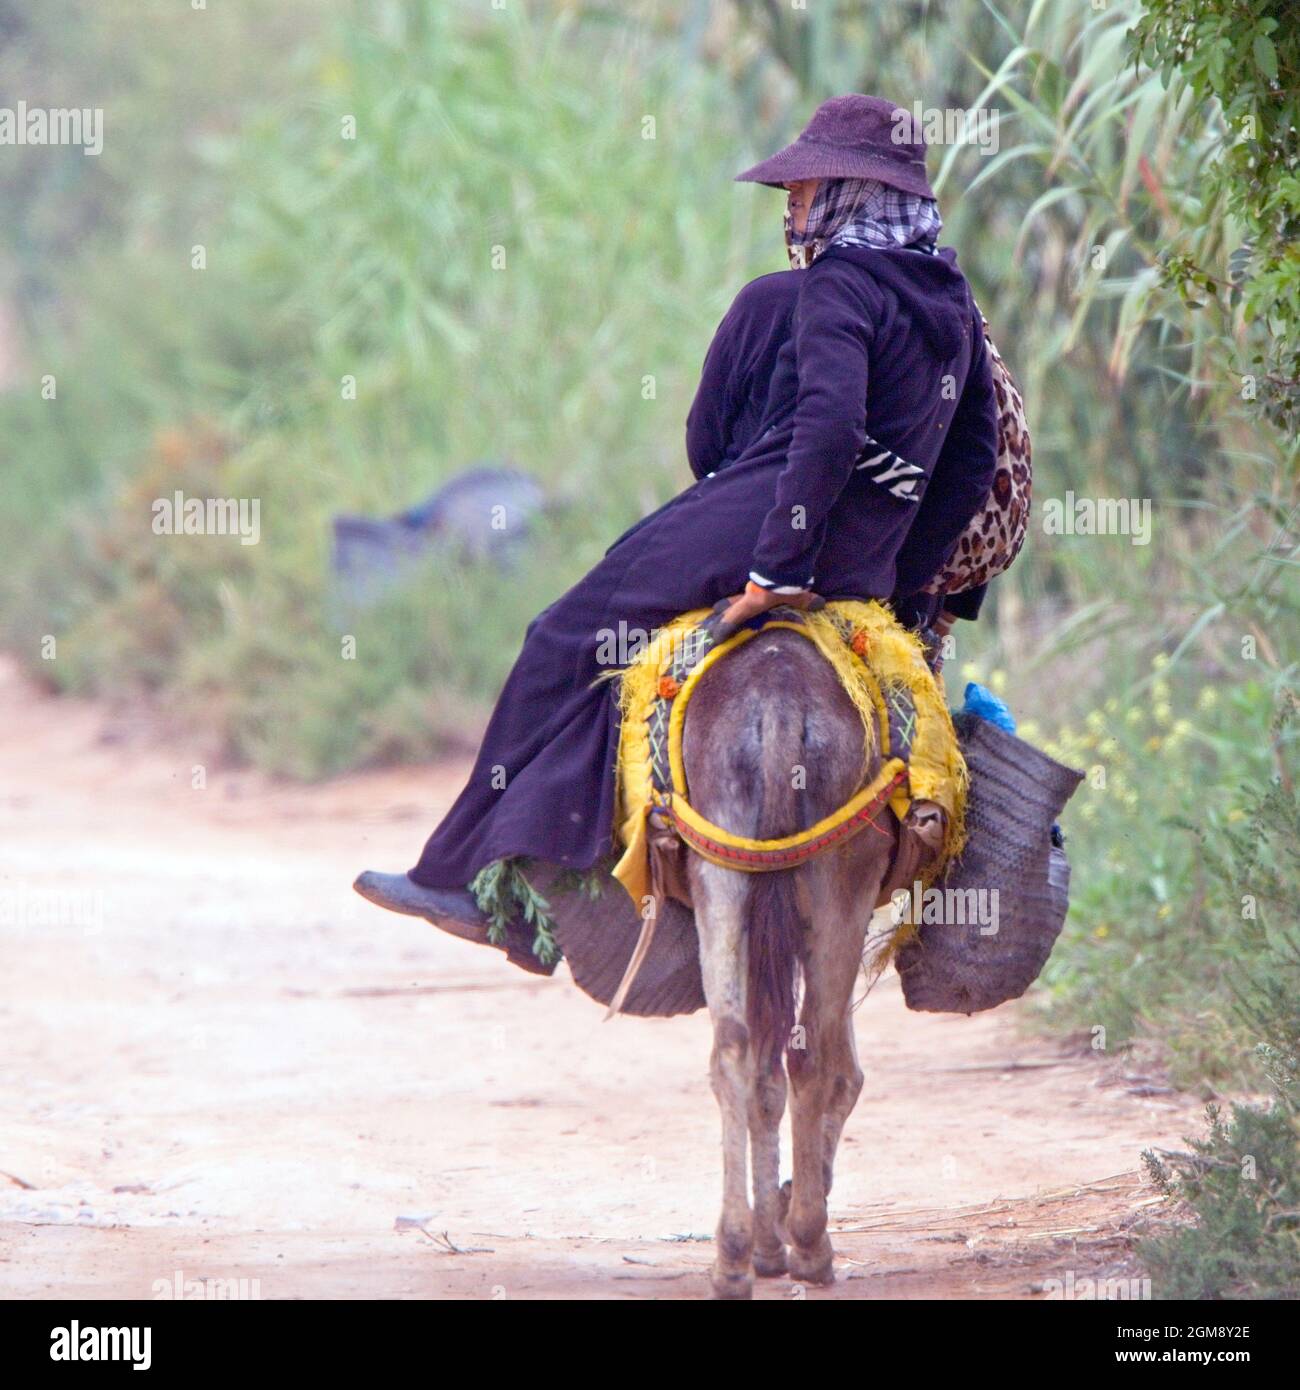 Heading home, a peasant woman riding on a donkey, near Agadir, Morocco. Stock Photo